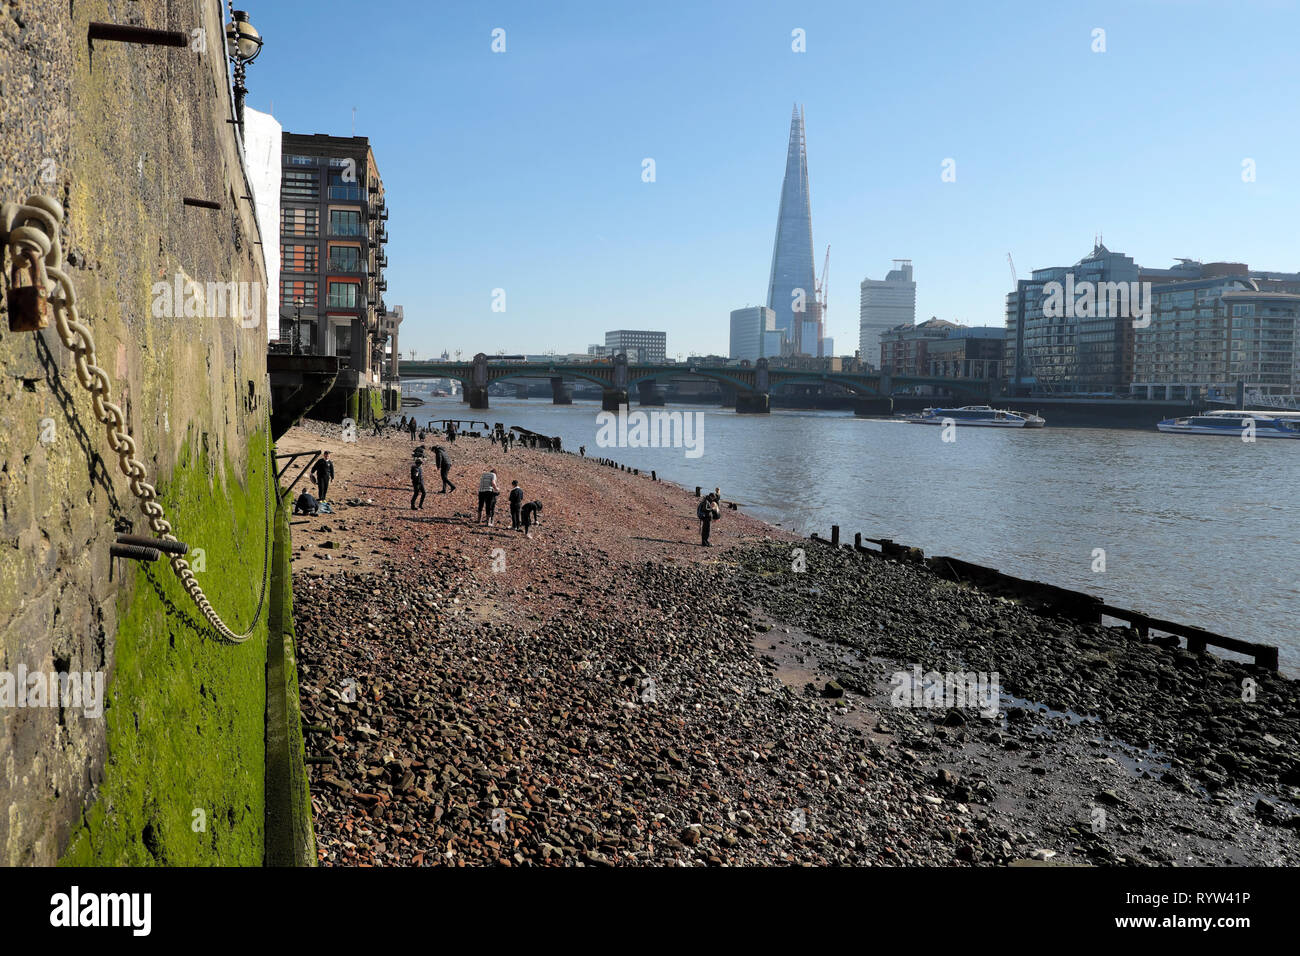 View of River Thames at low tide, Shard building, people mudlarking ...